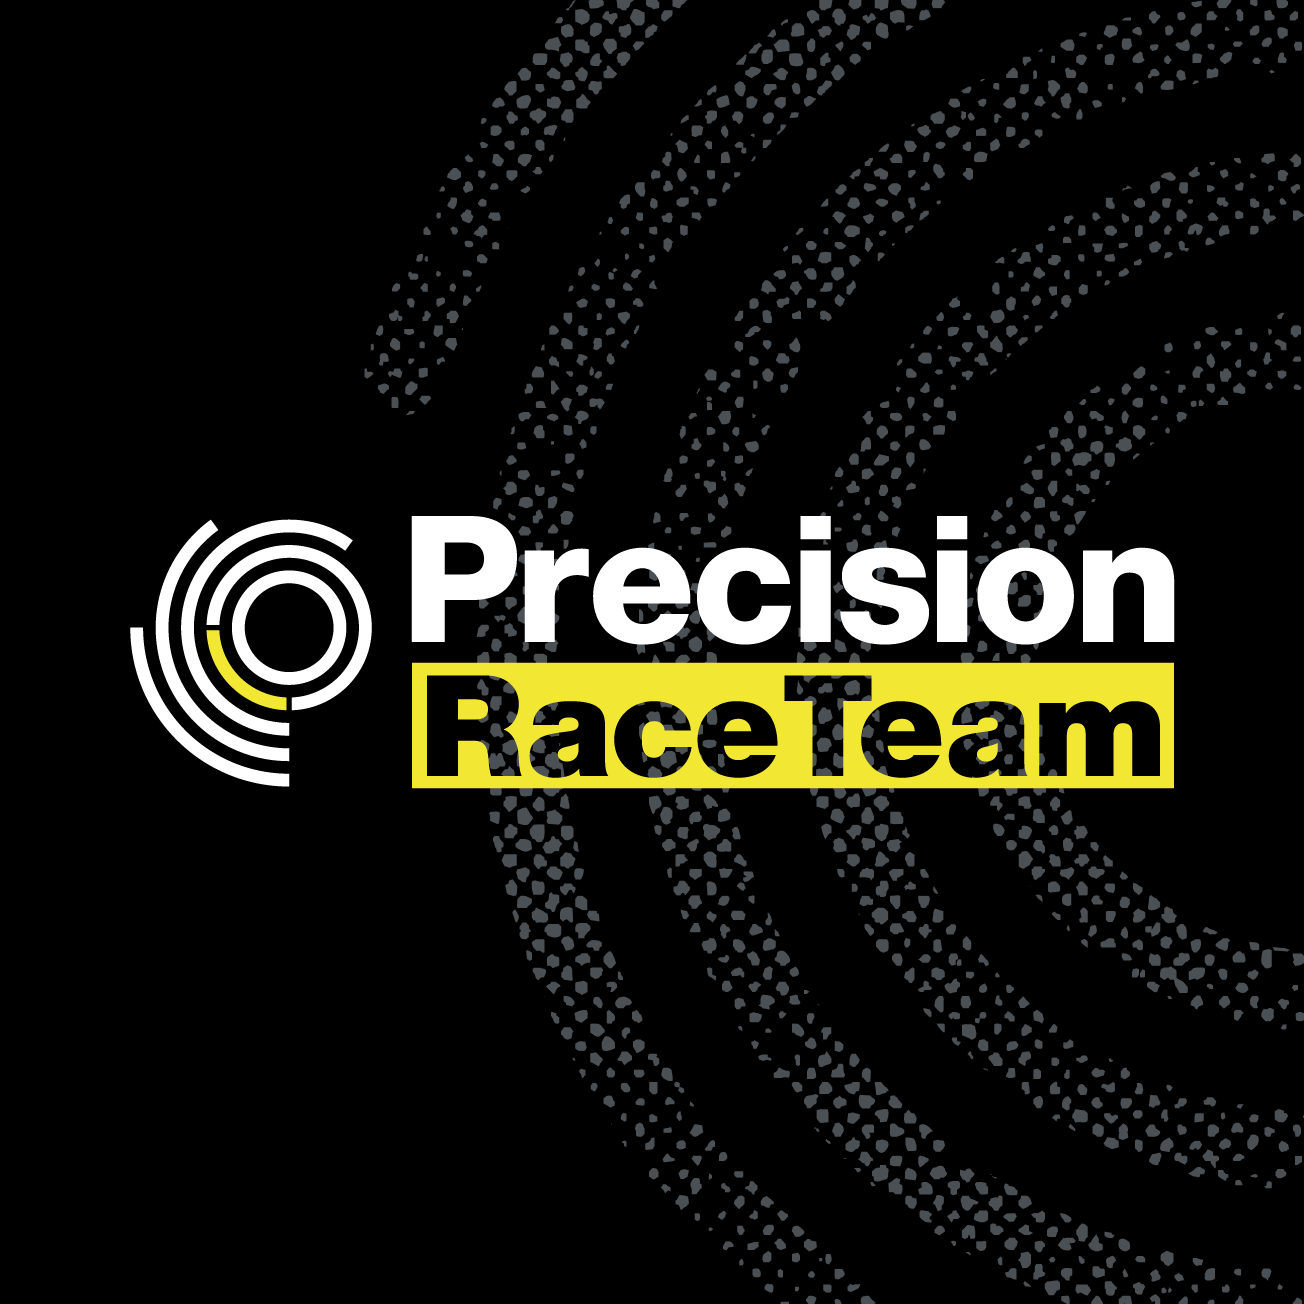 Club Image for PRECISION RACE TEAM